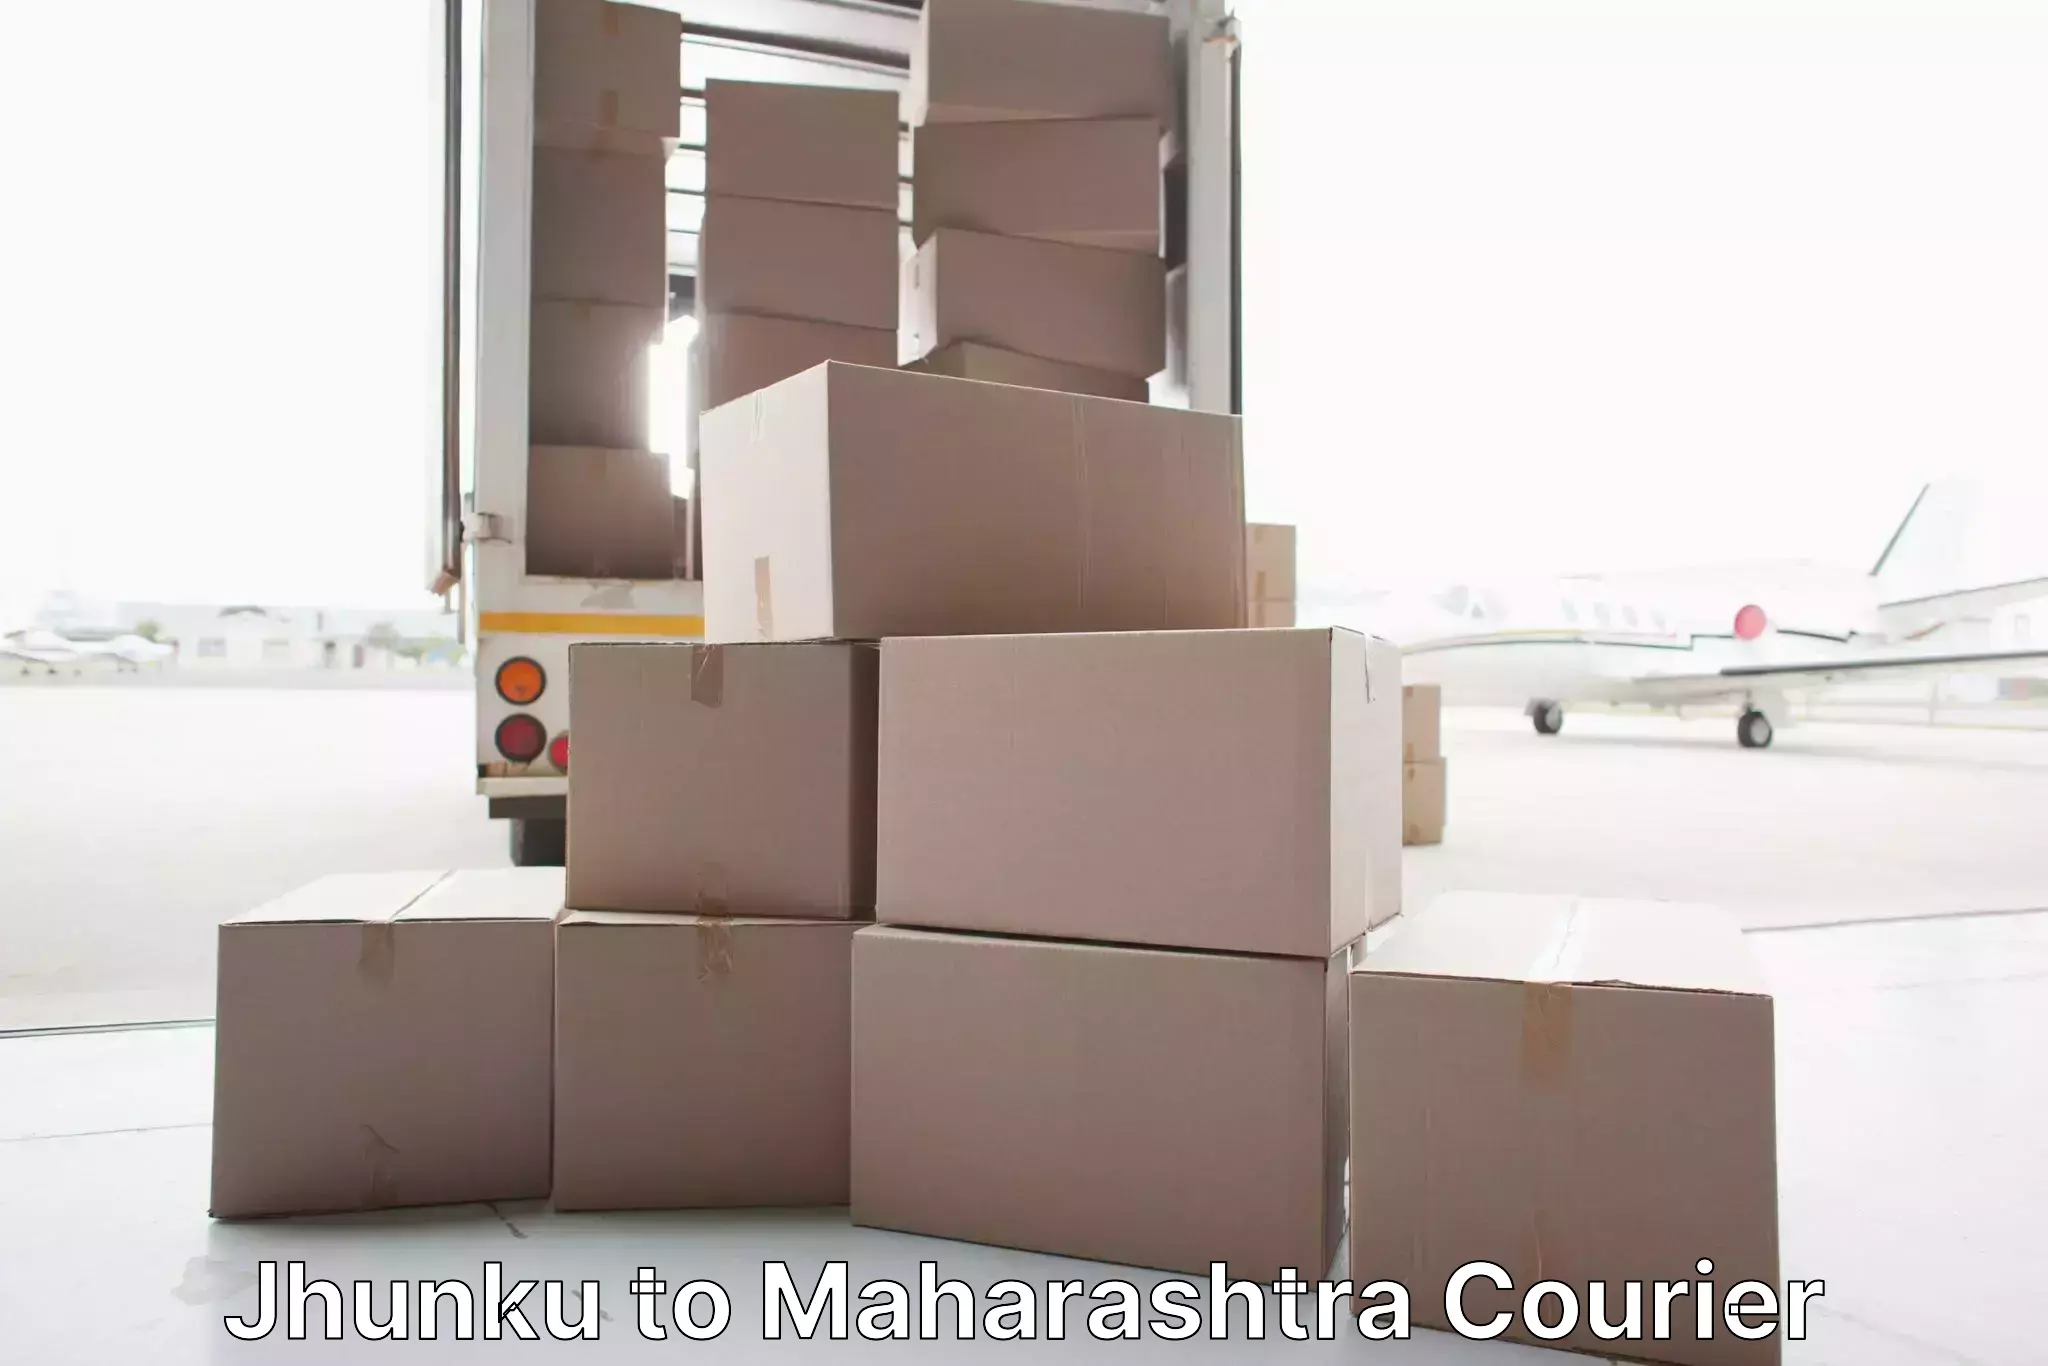 Home moving specialists Jhunku to Mumbai Port